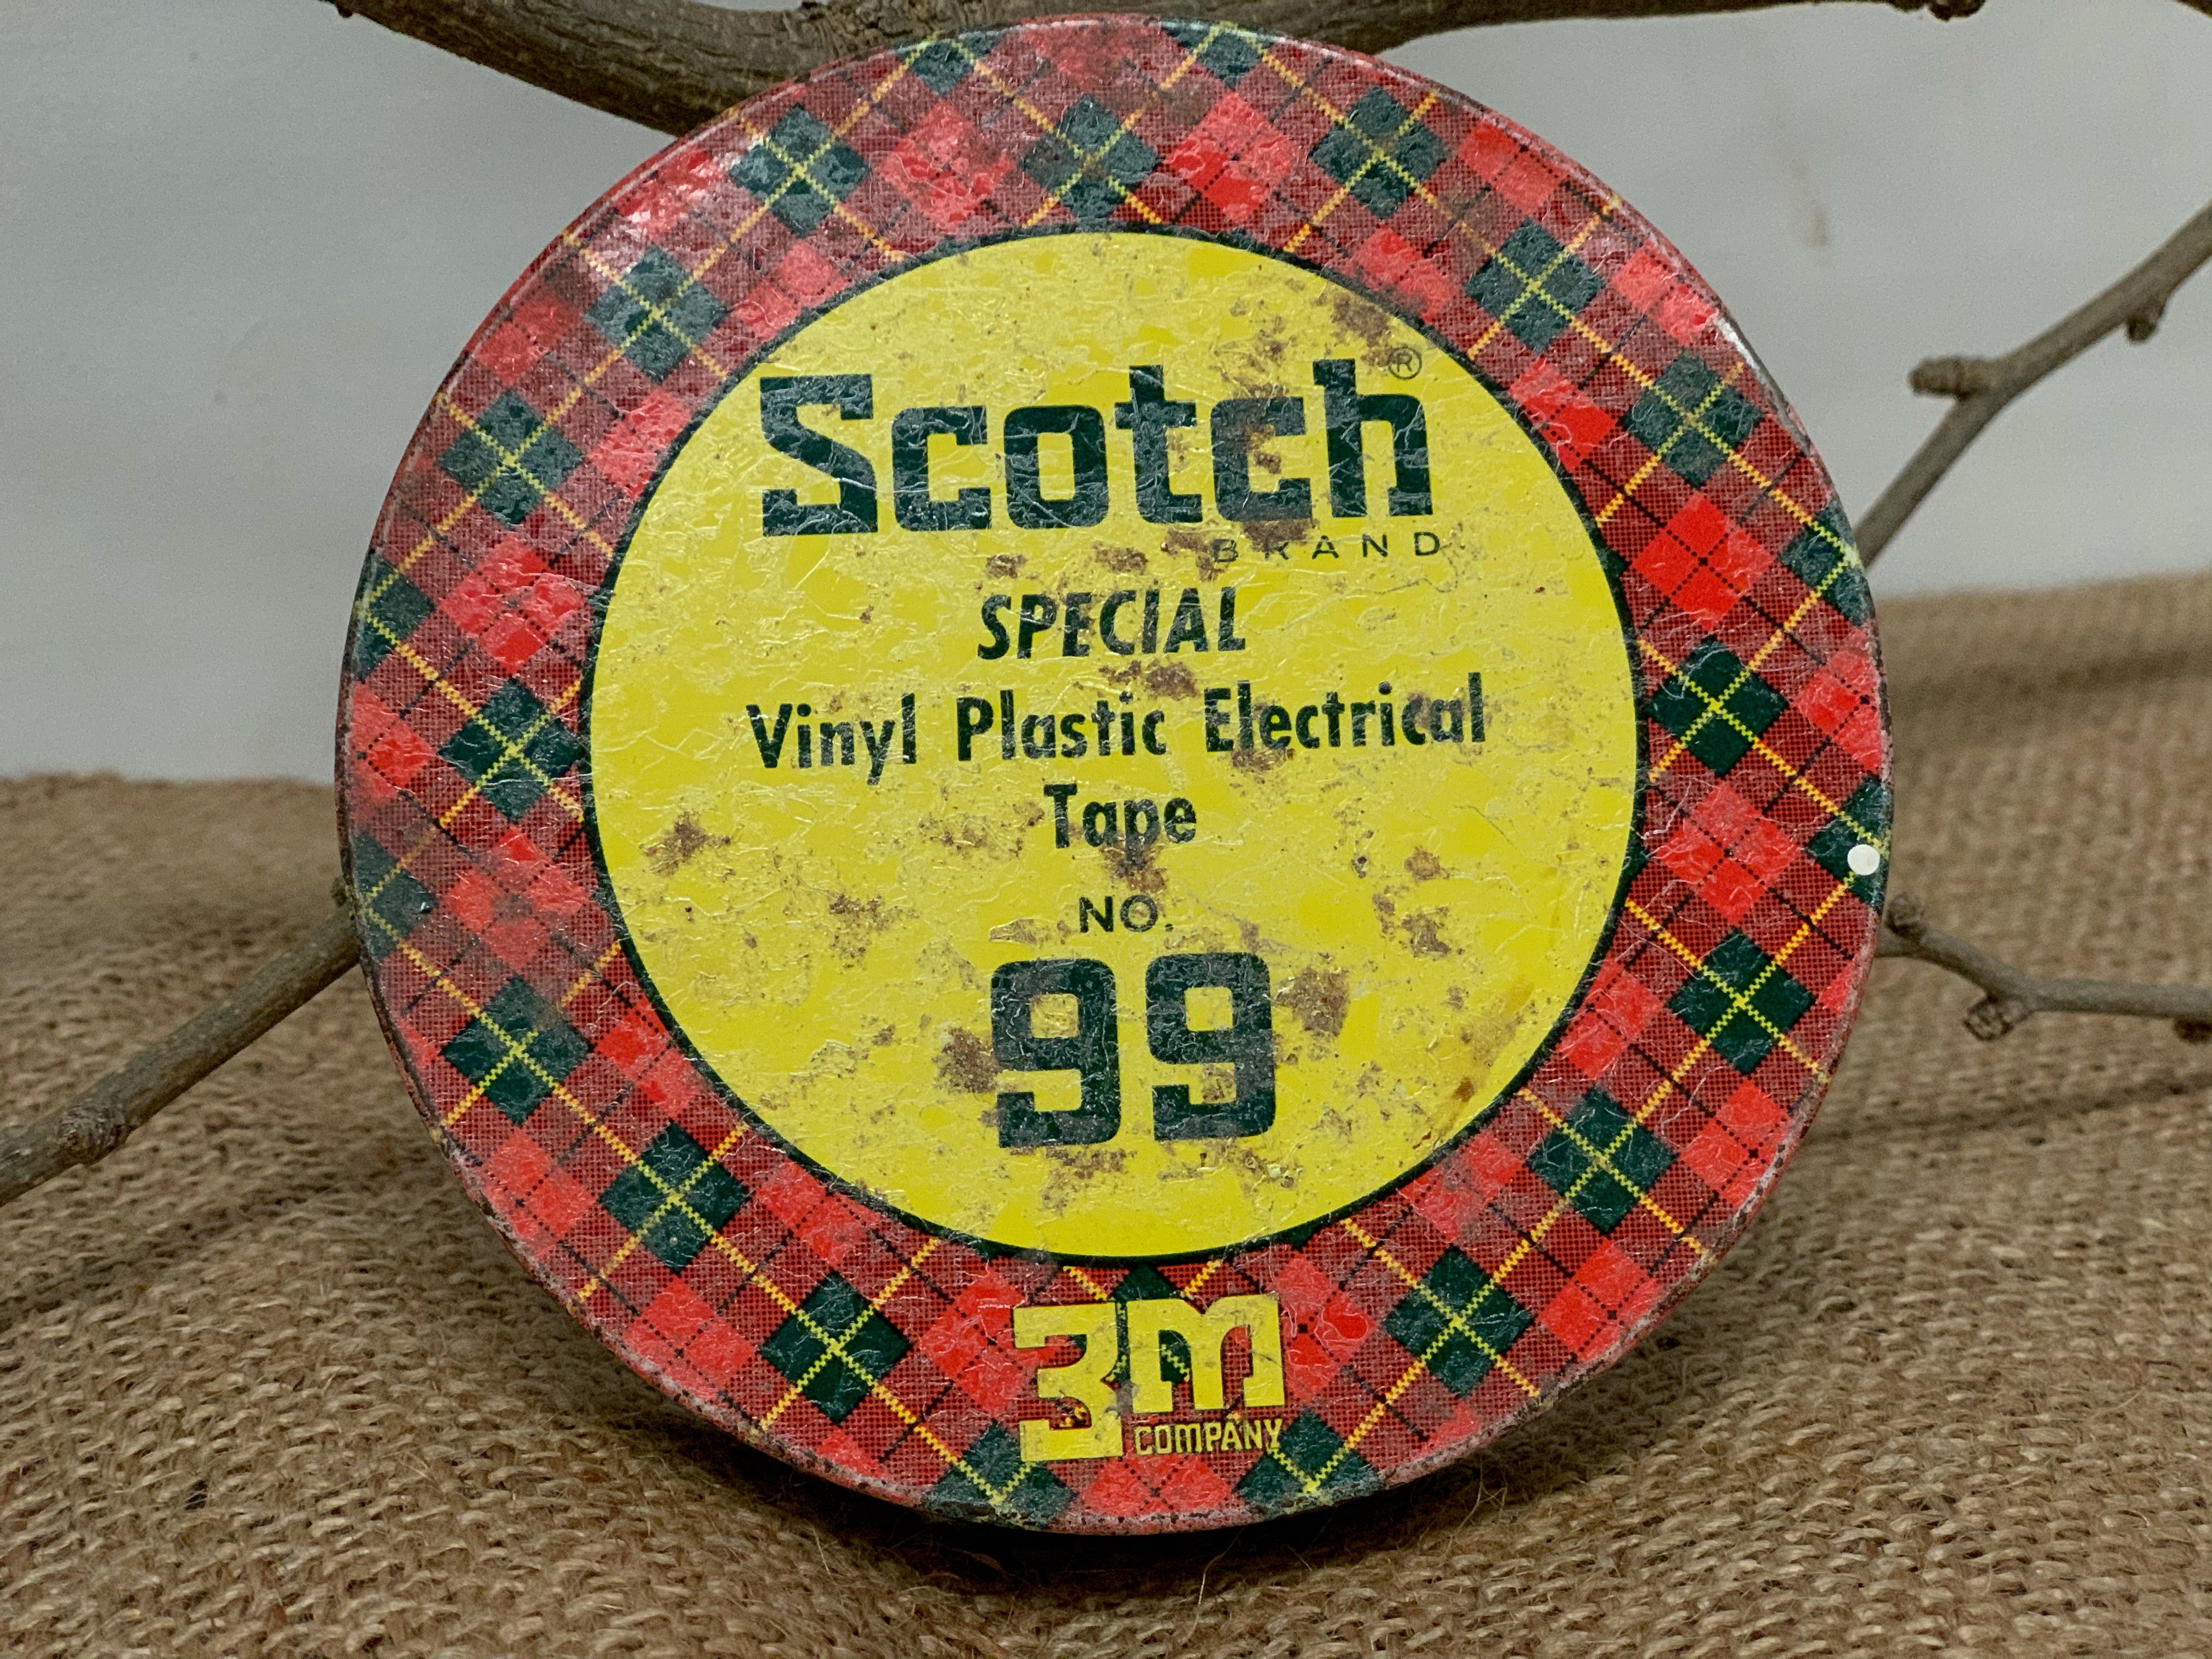 Vintage Scotch Tape Tin